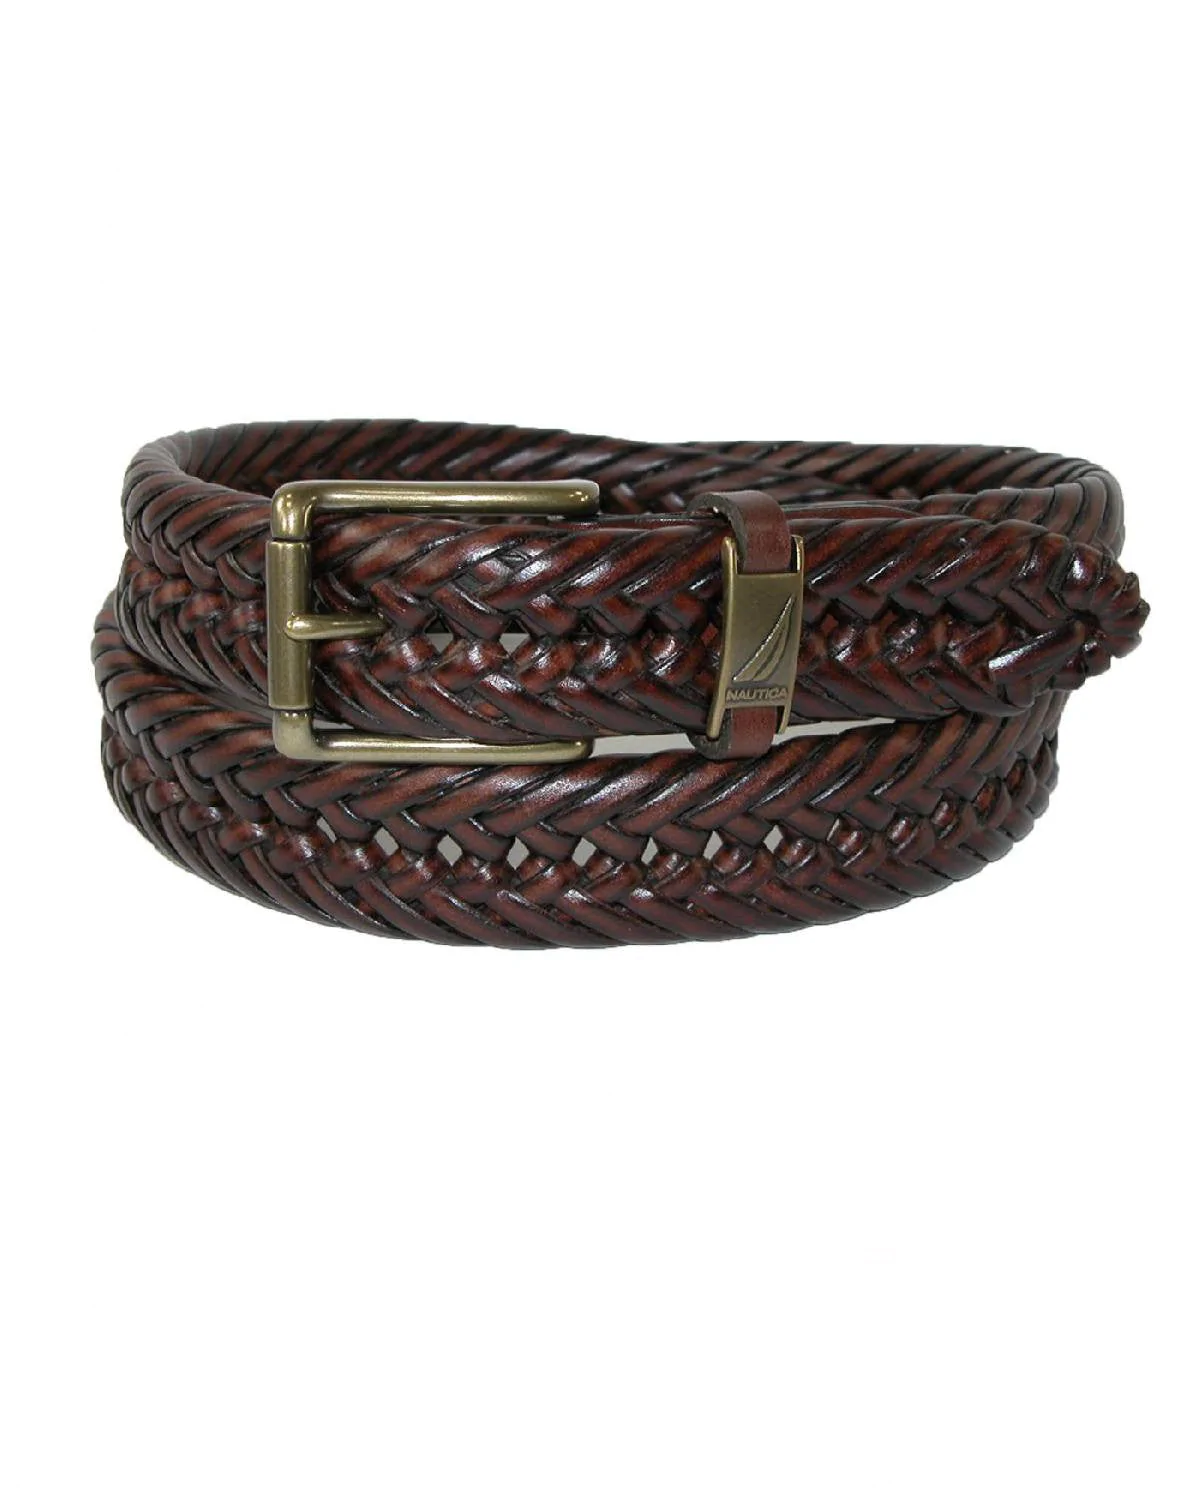 Nautica Mens Leather Handlaced Basket Weave Braided Belt